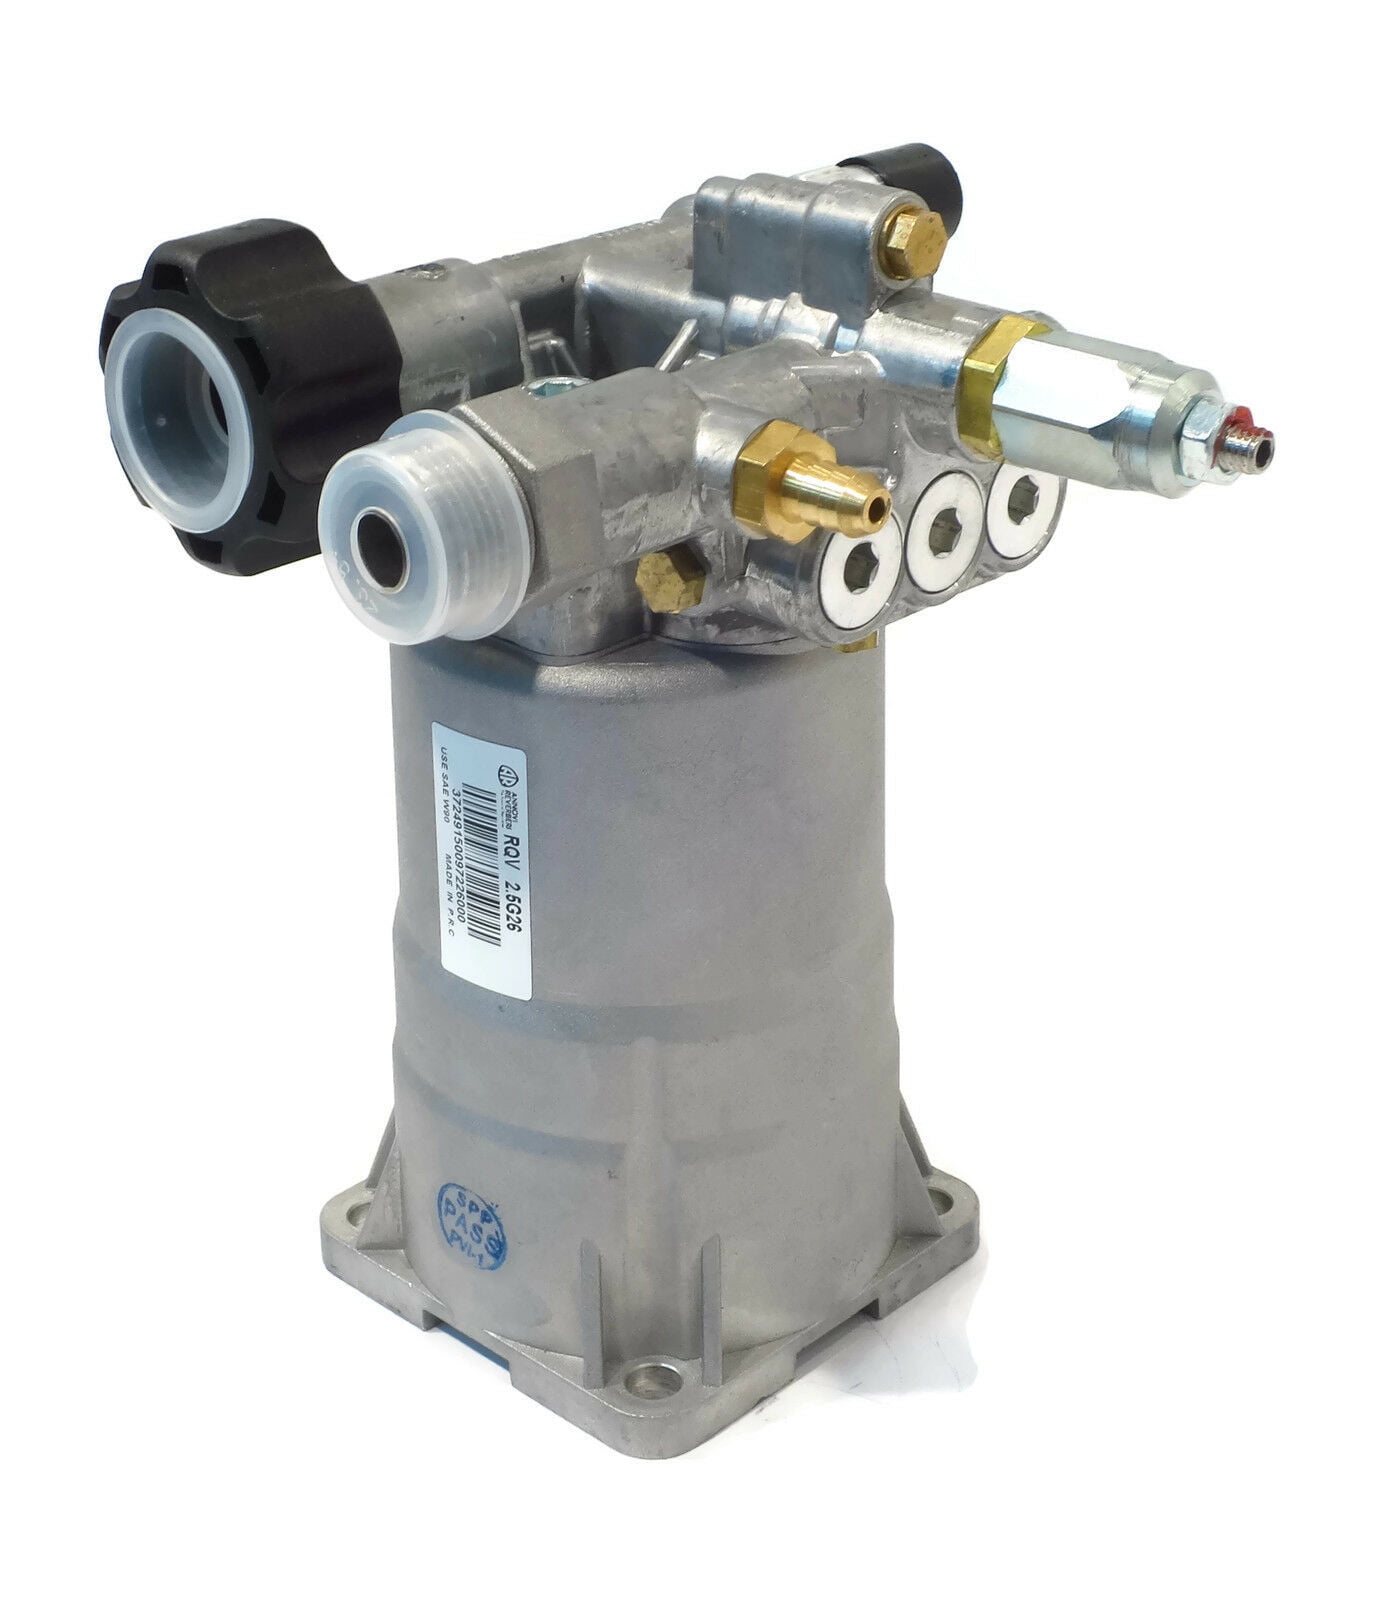 Power Pressure Washer Water Pump for Coleman Powermate PW0952750 Engine Sprayers